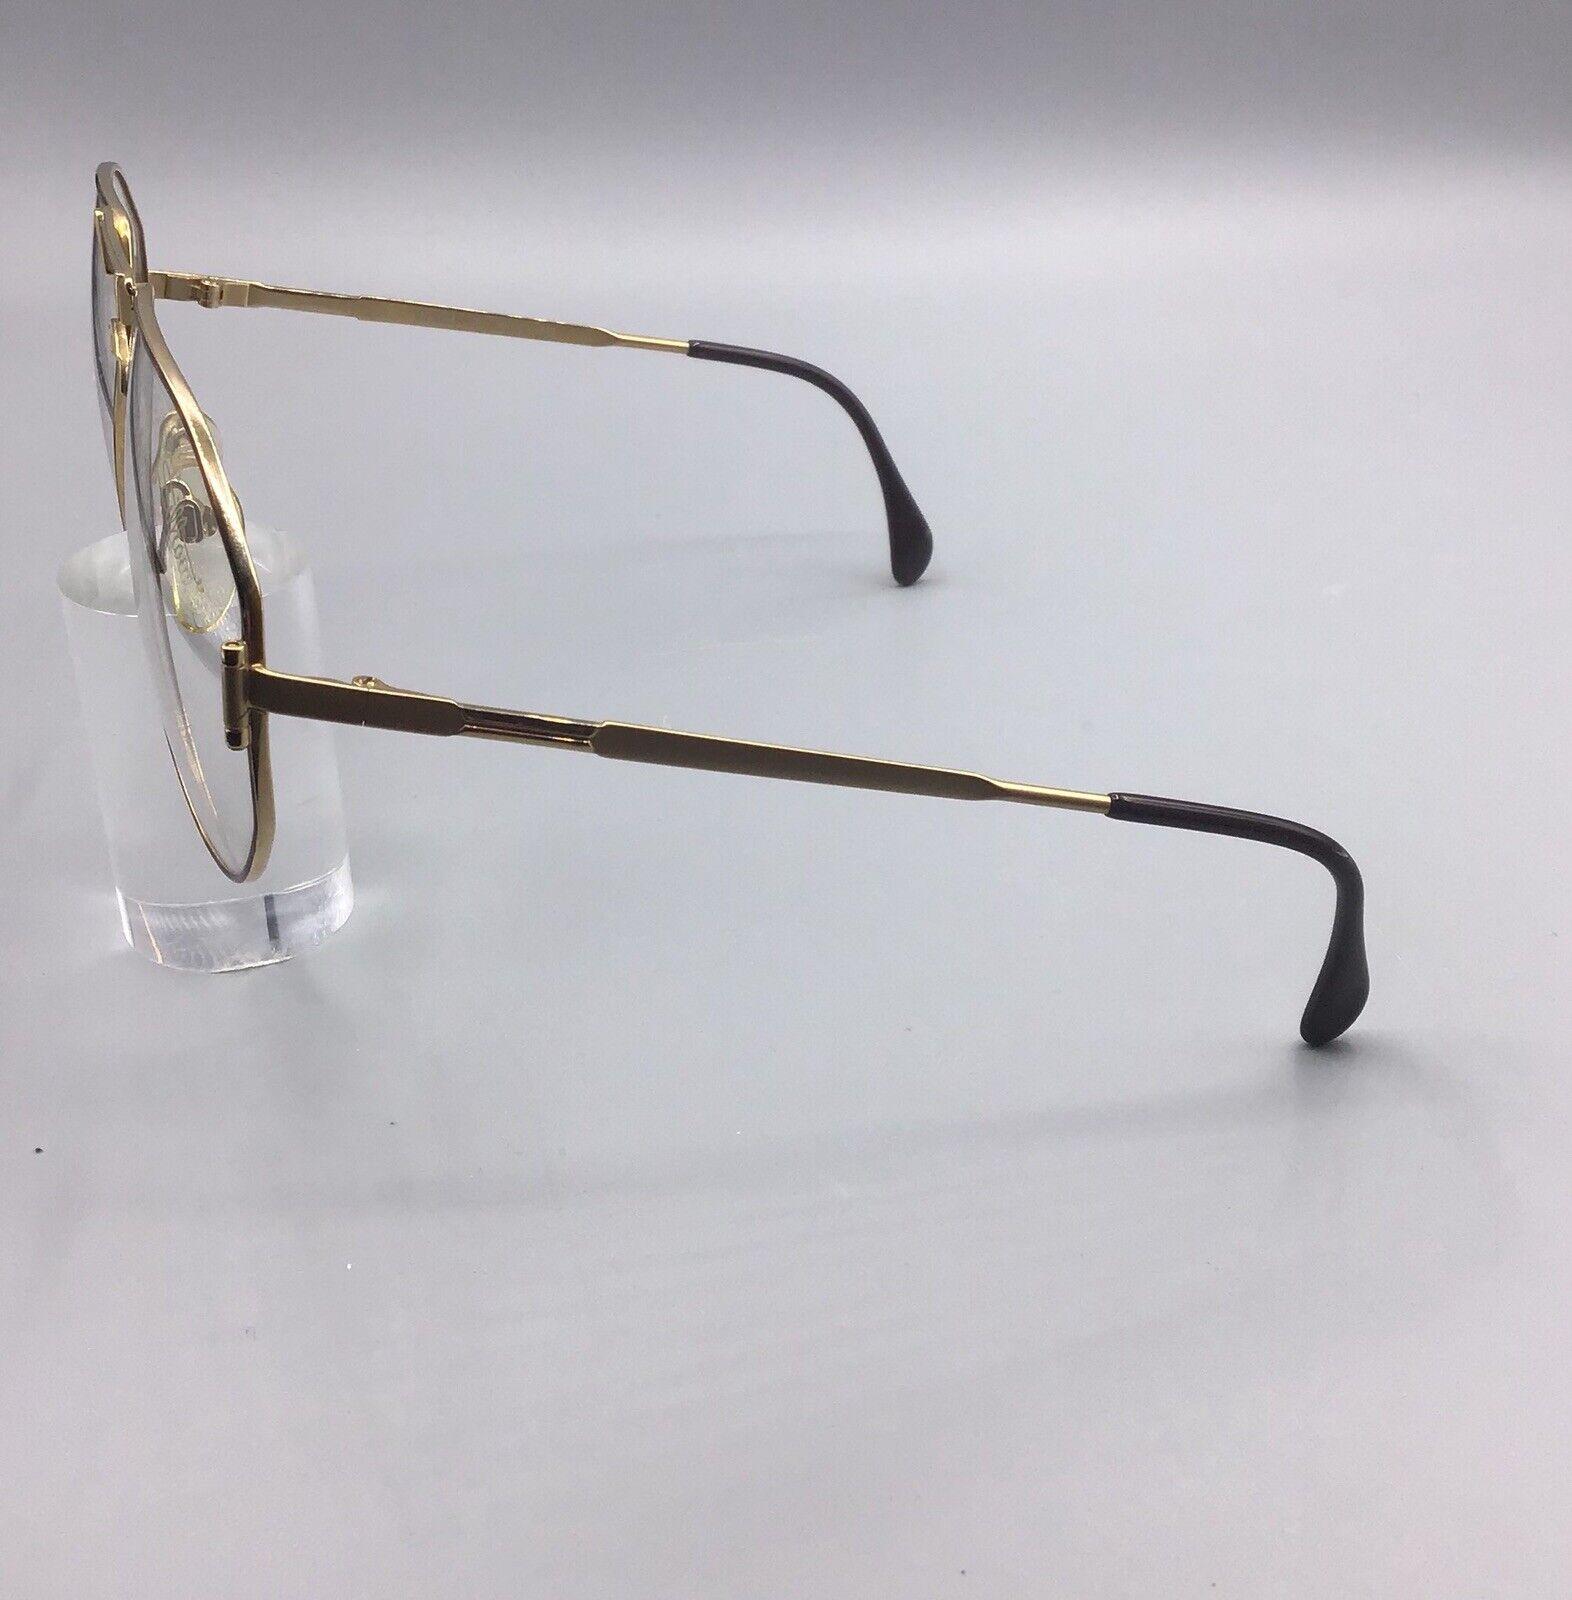 Silhouette occhiale vintage frame Austria col.4198 M7061 /20 eyewear frame gold